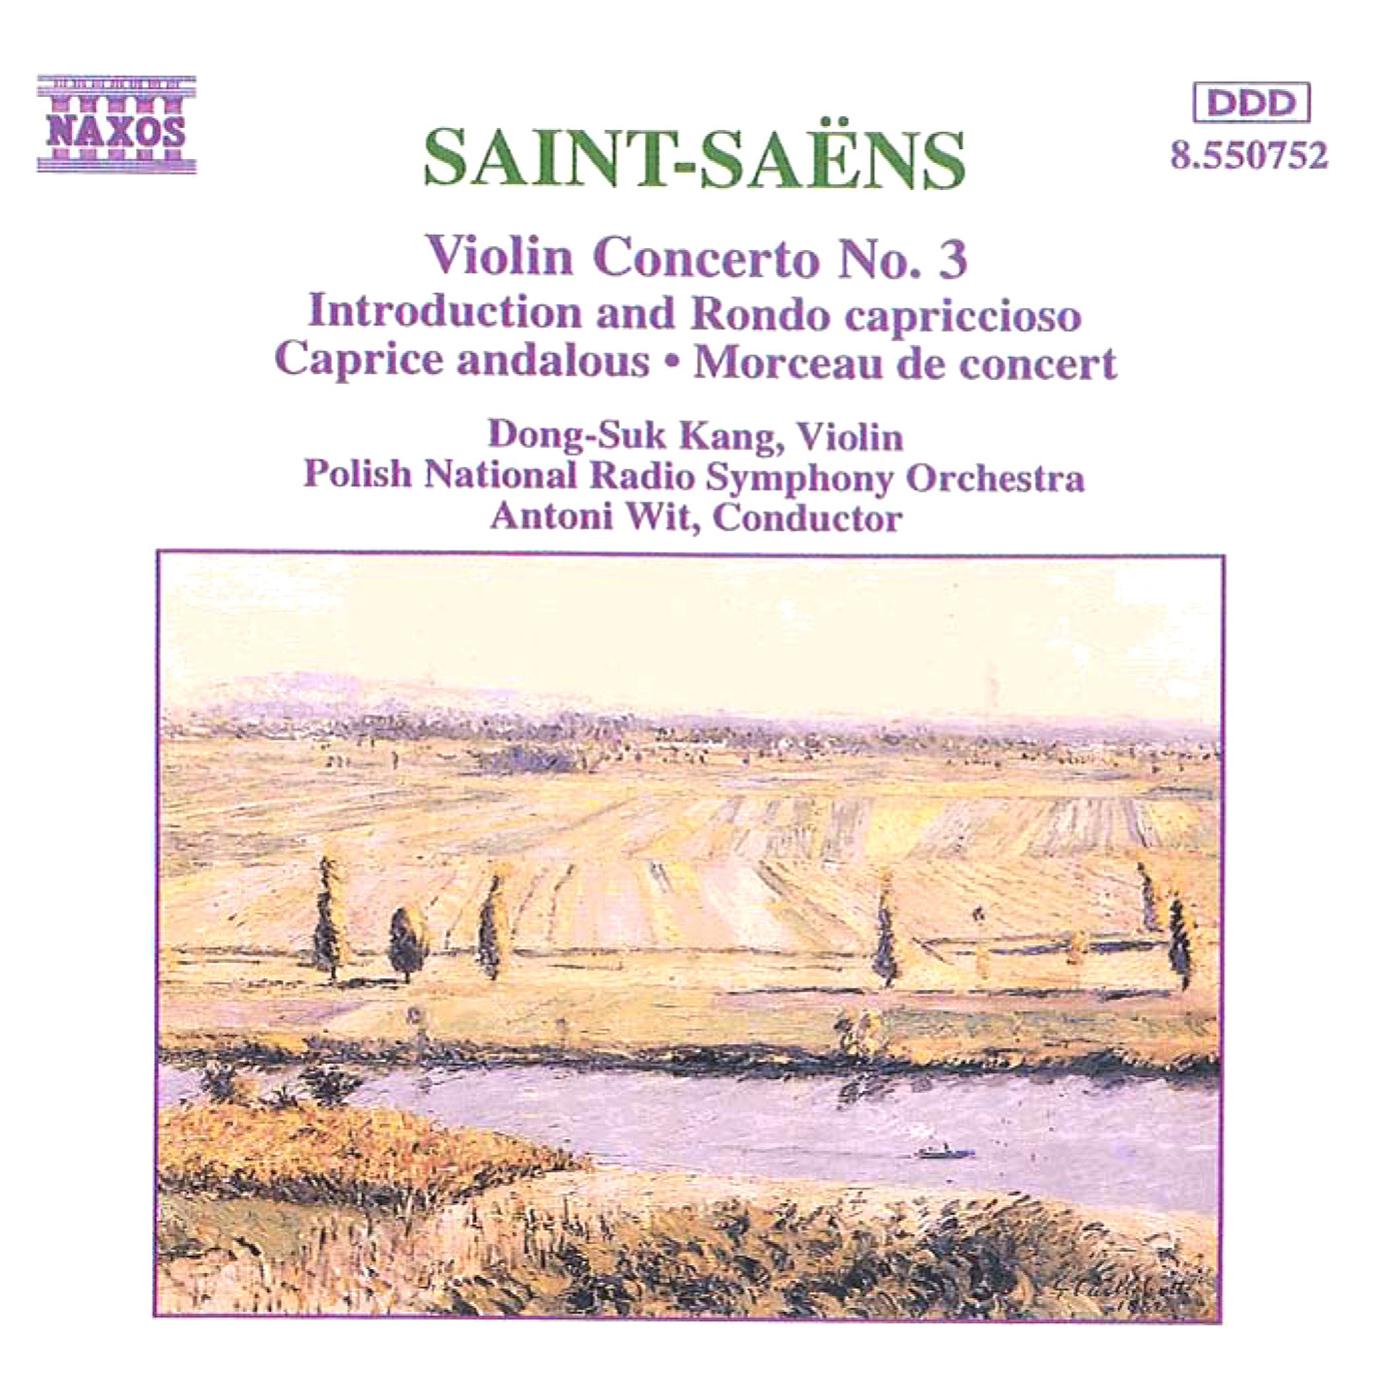 SAINT-SAENS: Violin Concerto No. 3 / Caprice Andalous